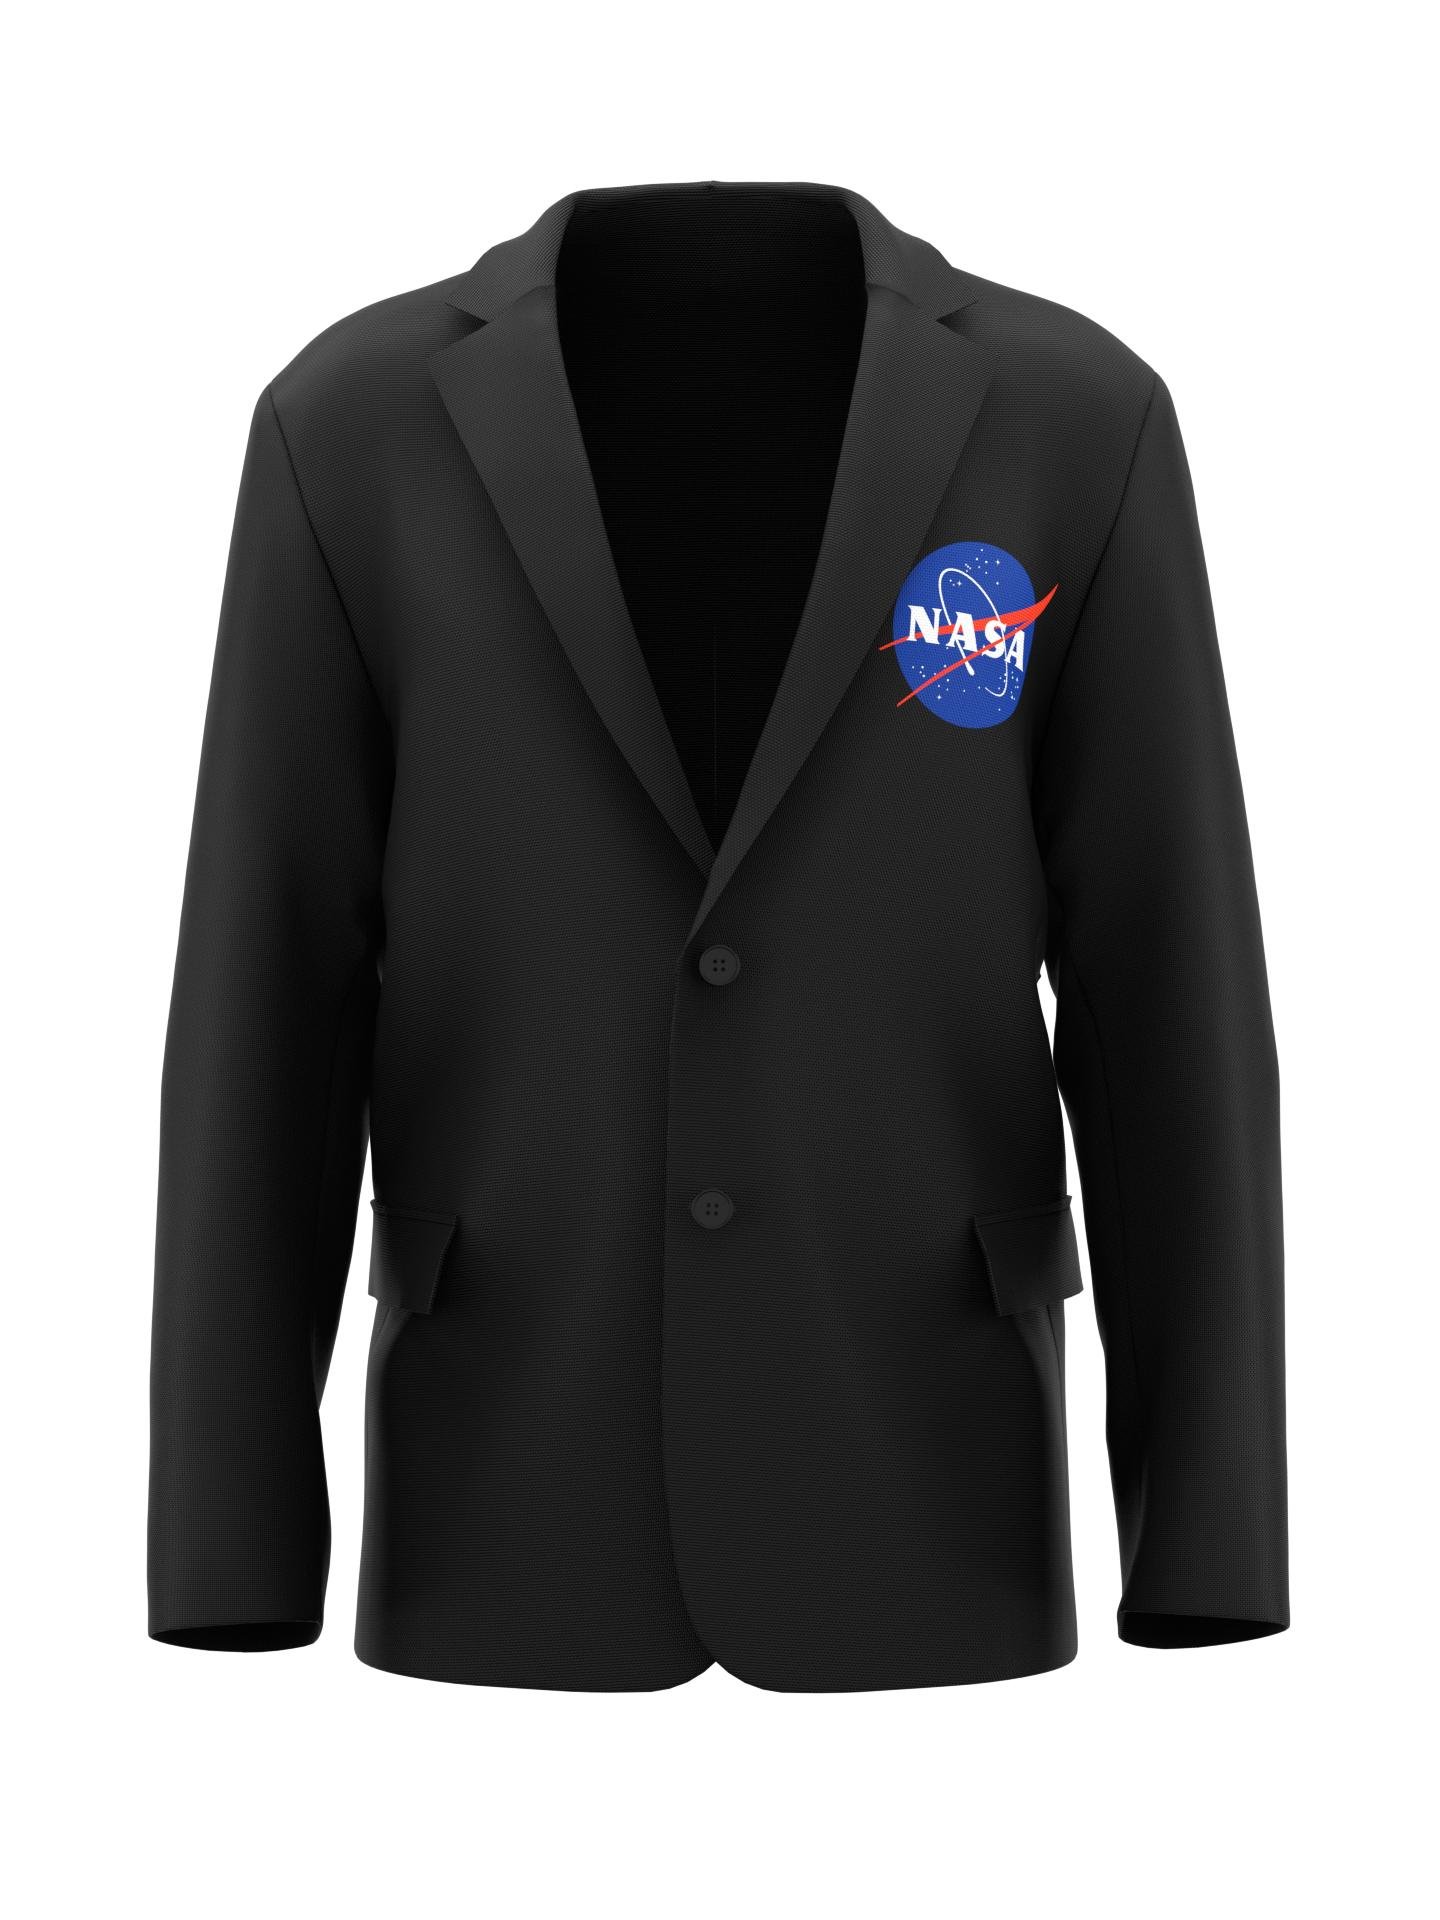 Blazer NASA Insignia logo black by DRESSX